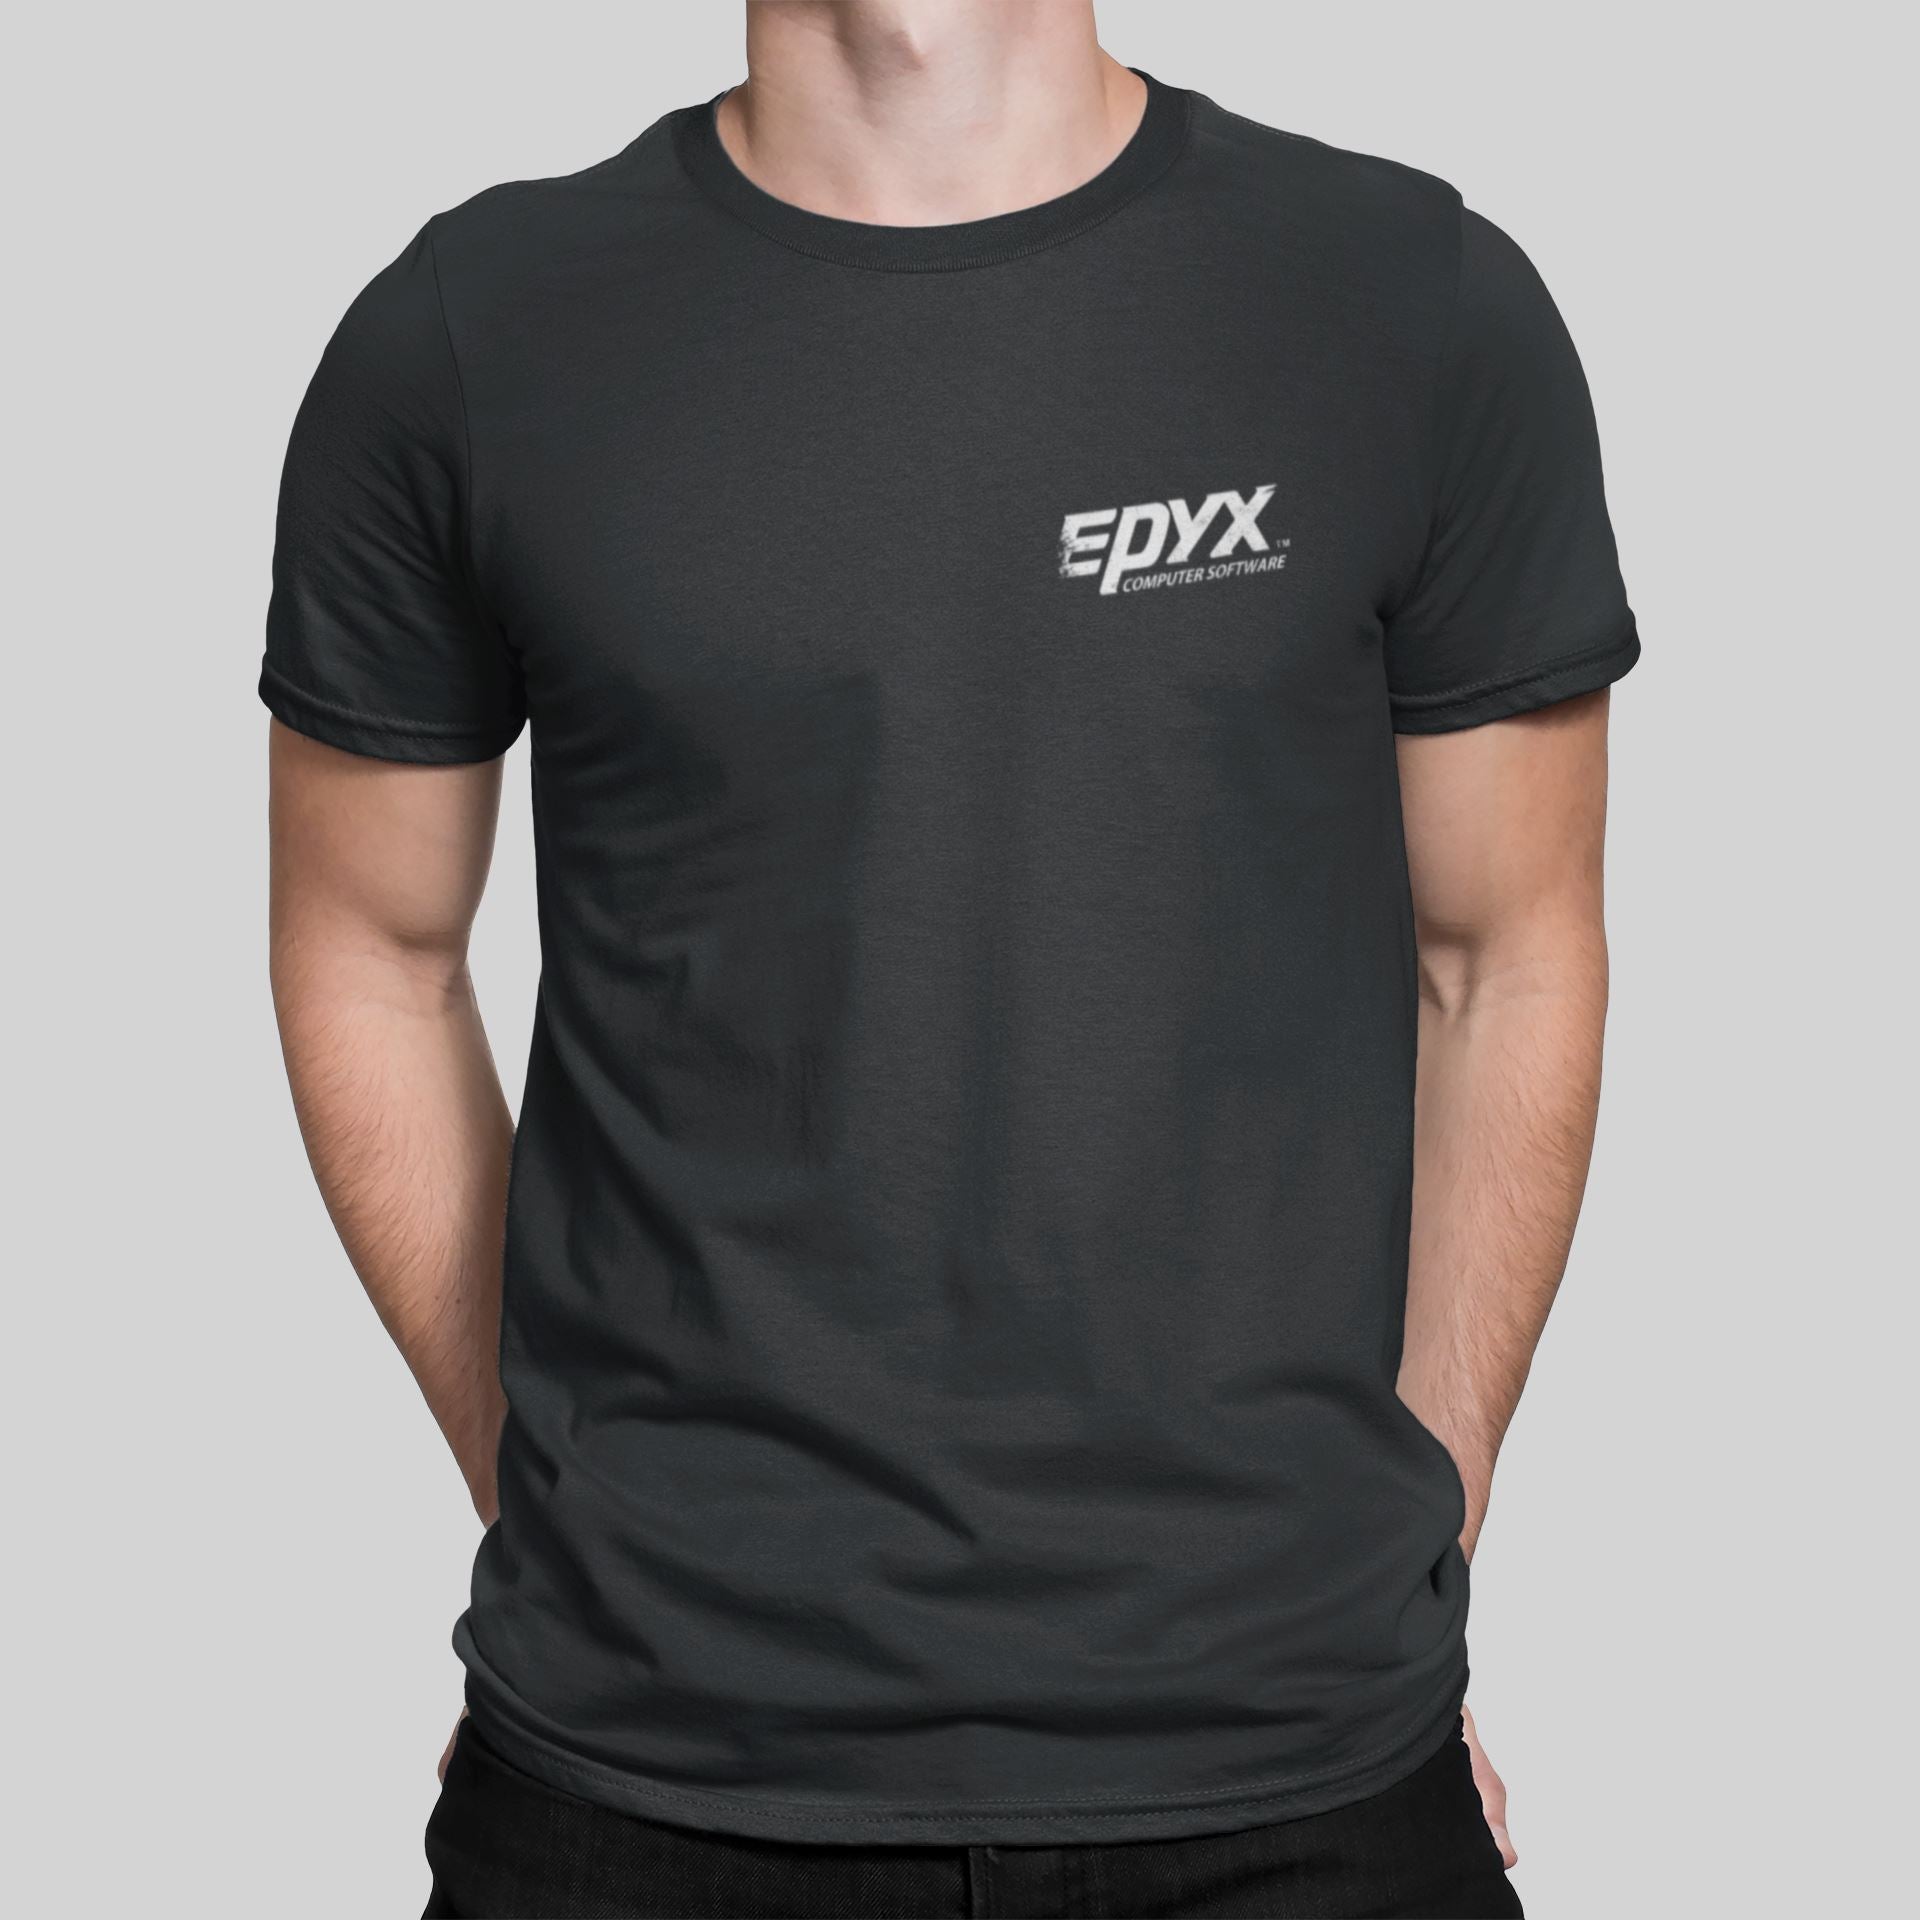 Epyx Software Pocket Print Retro Gaming T-Shirt T-Shirt Seven Squared Small 34-36" Black 